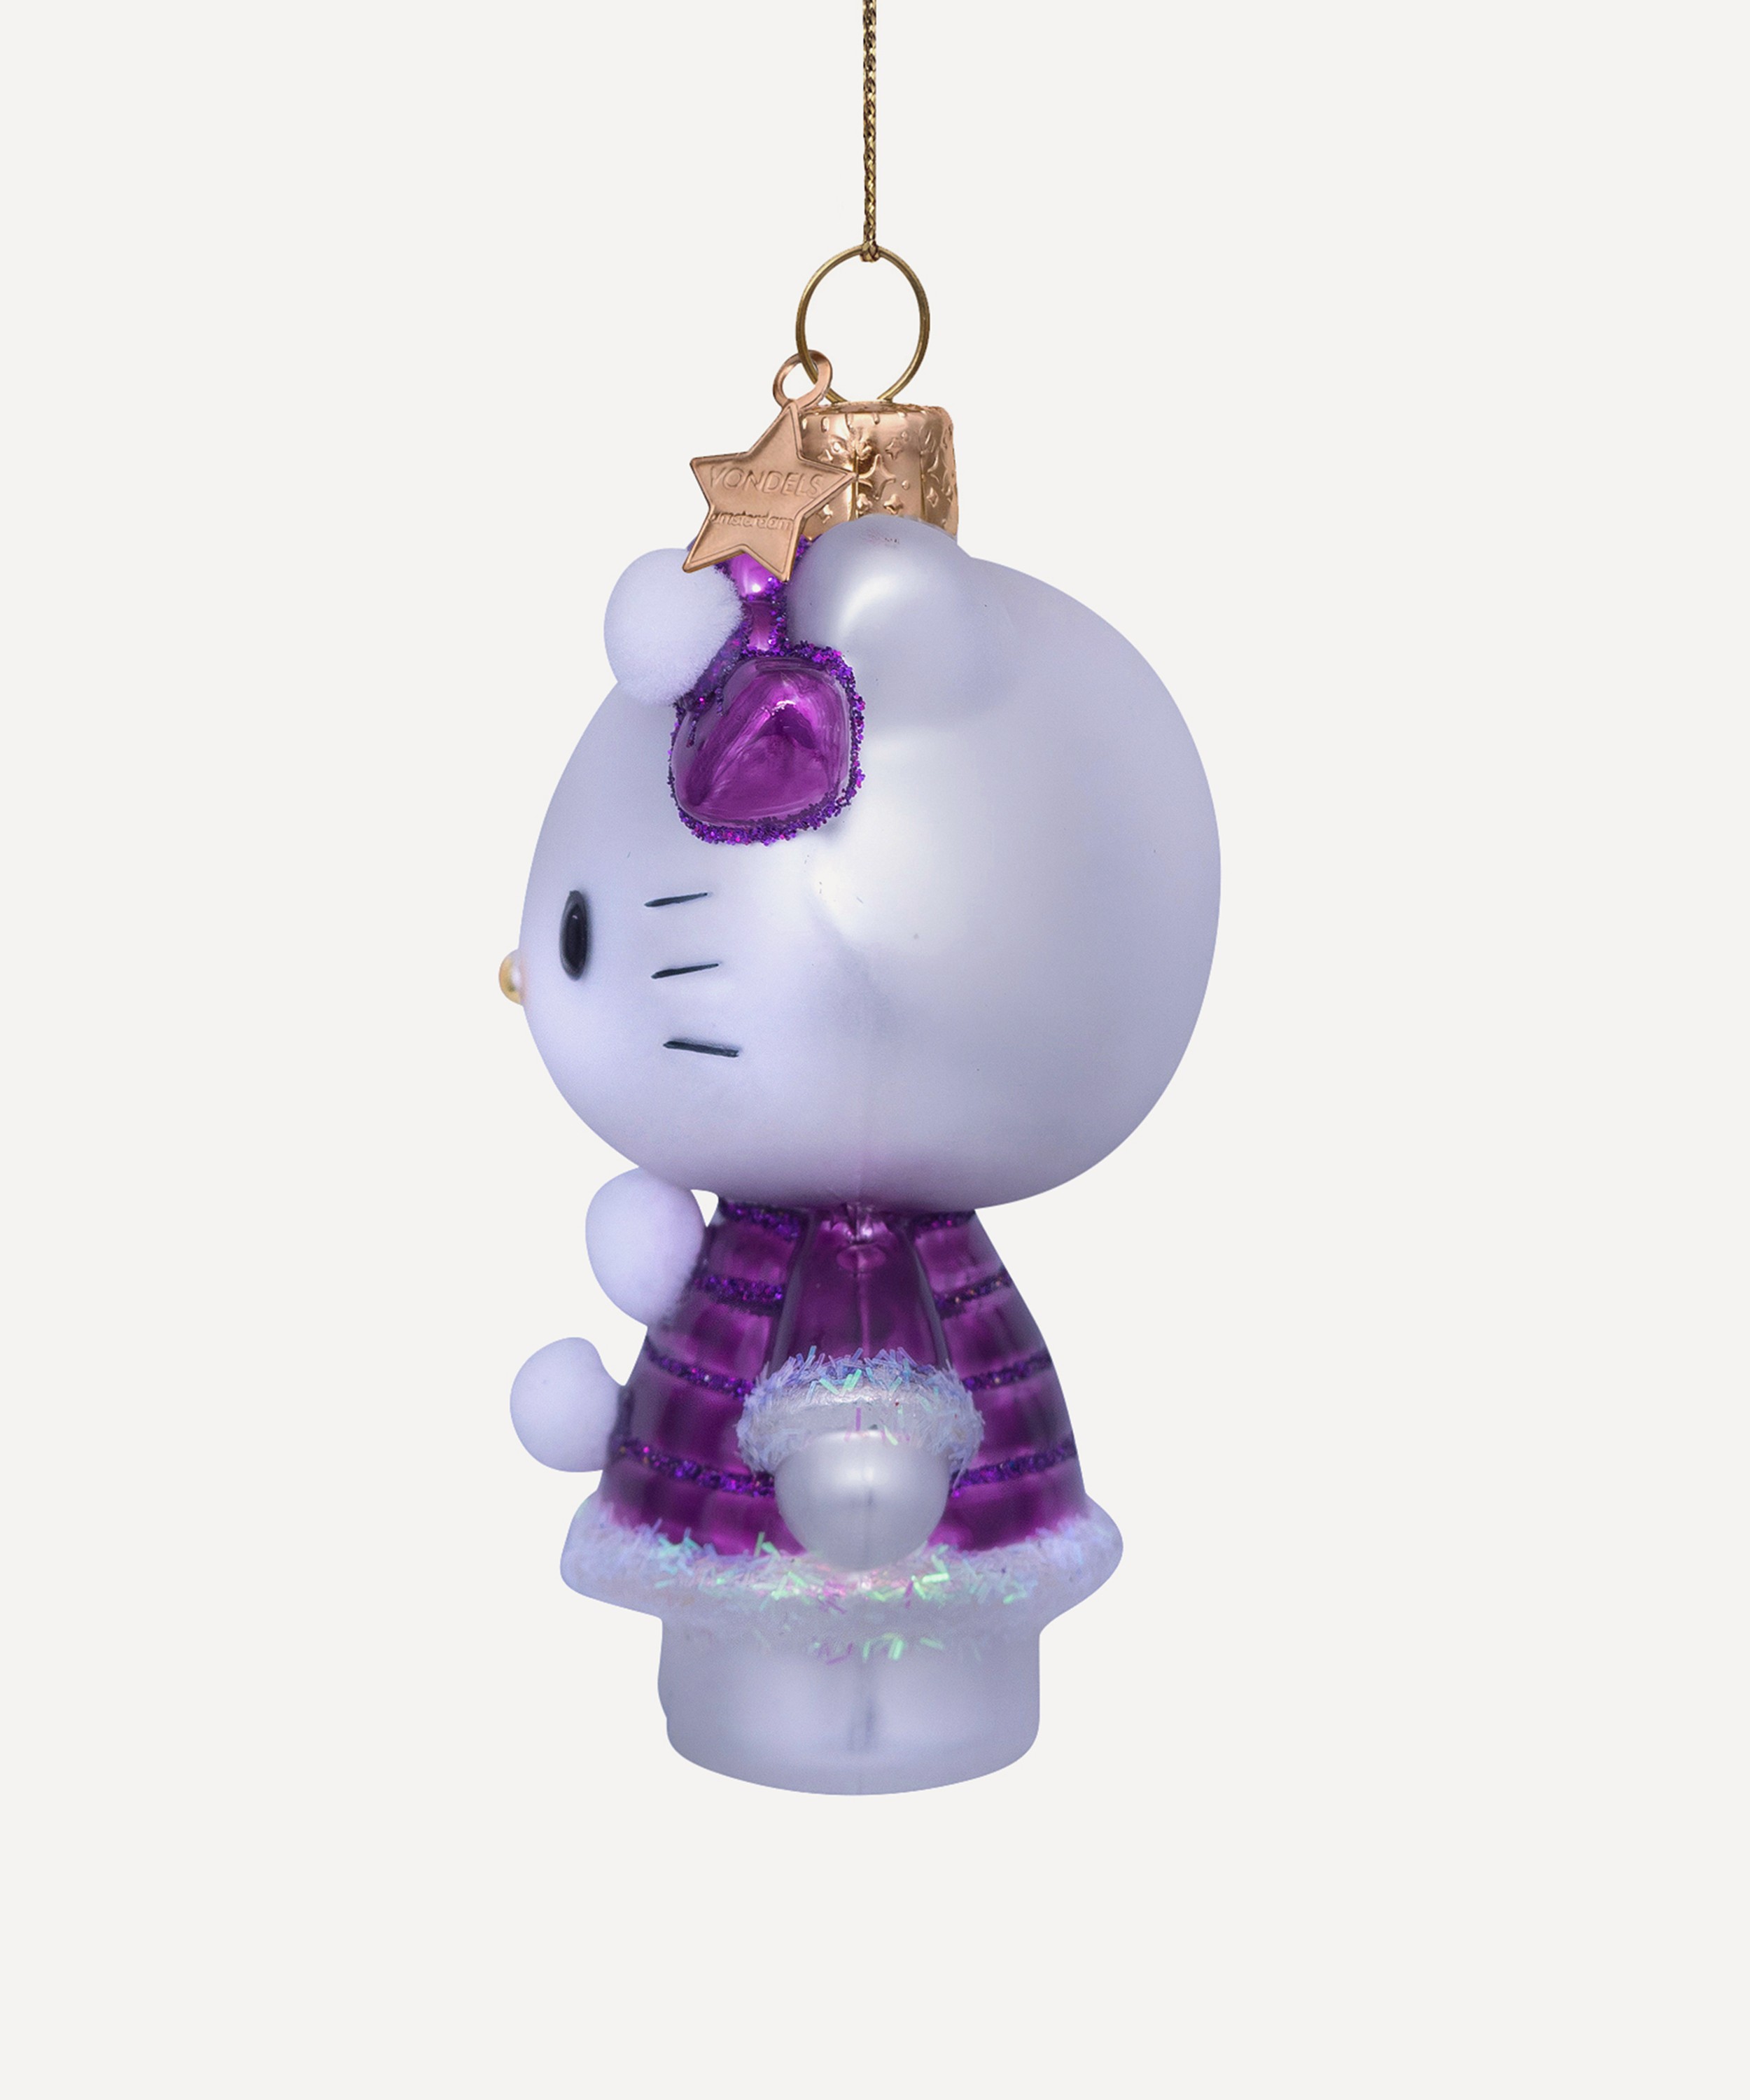 Vondels Purple Handbag Christmas Ornament